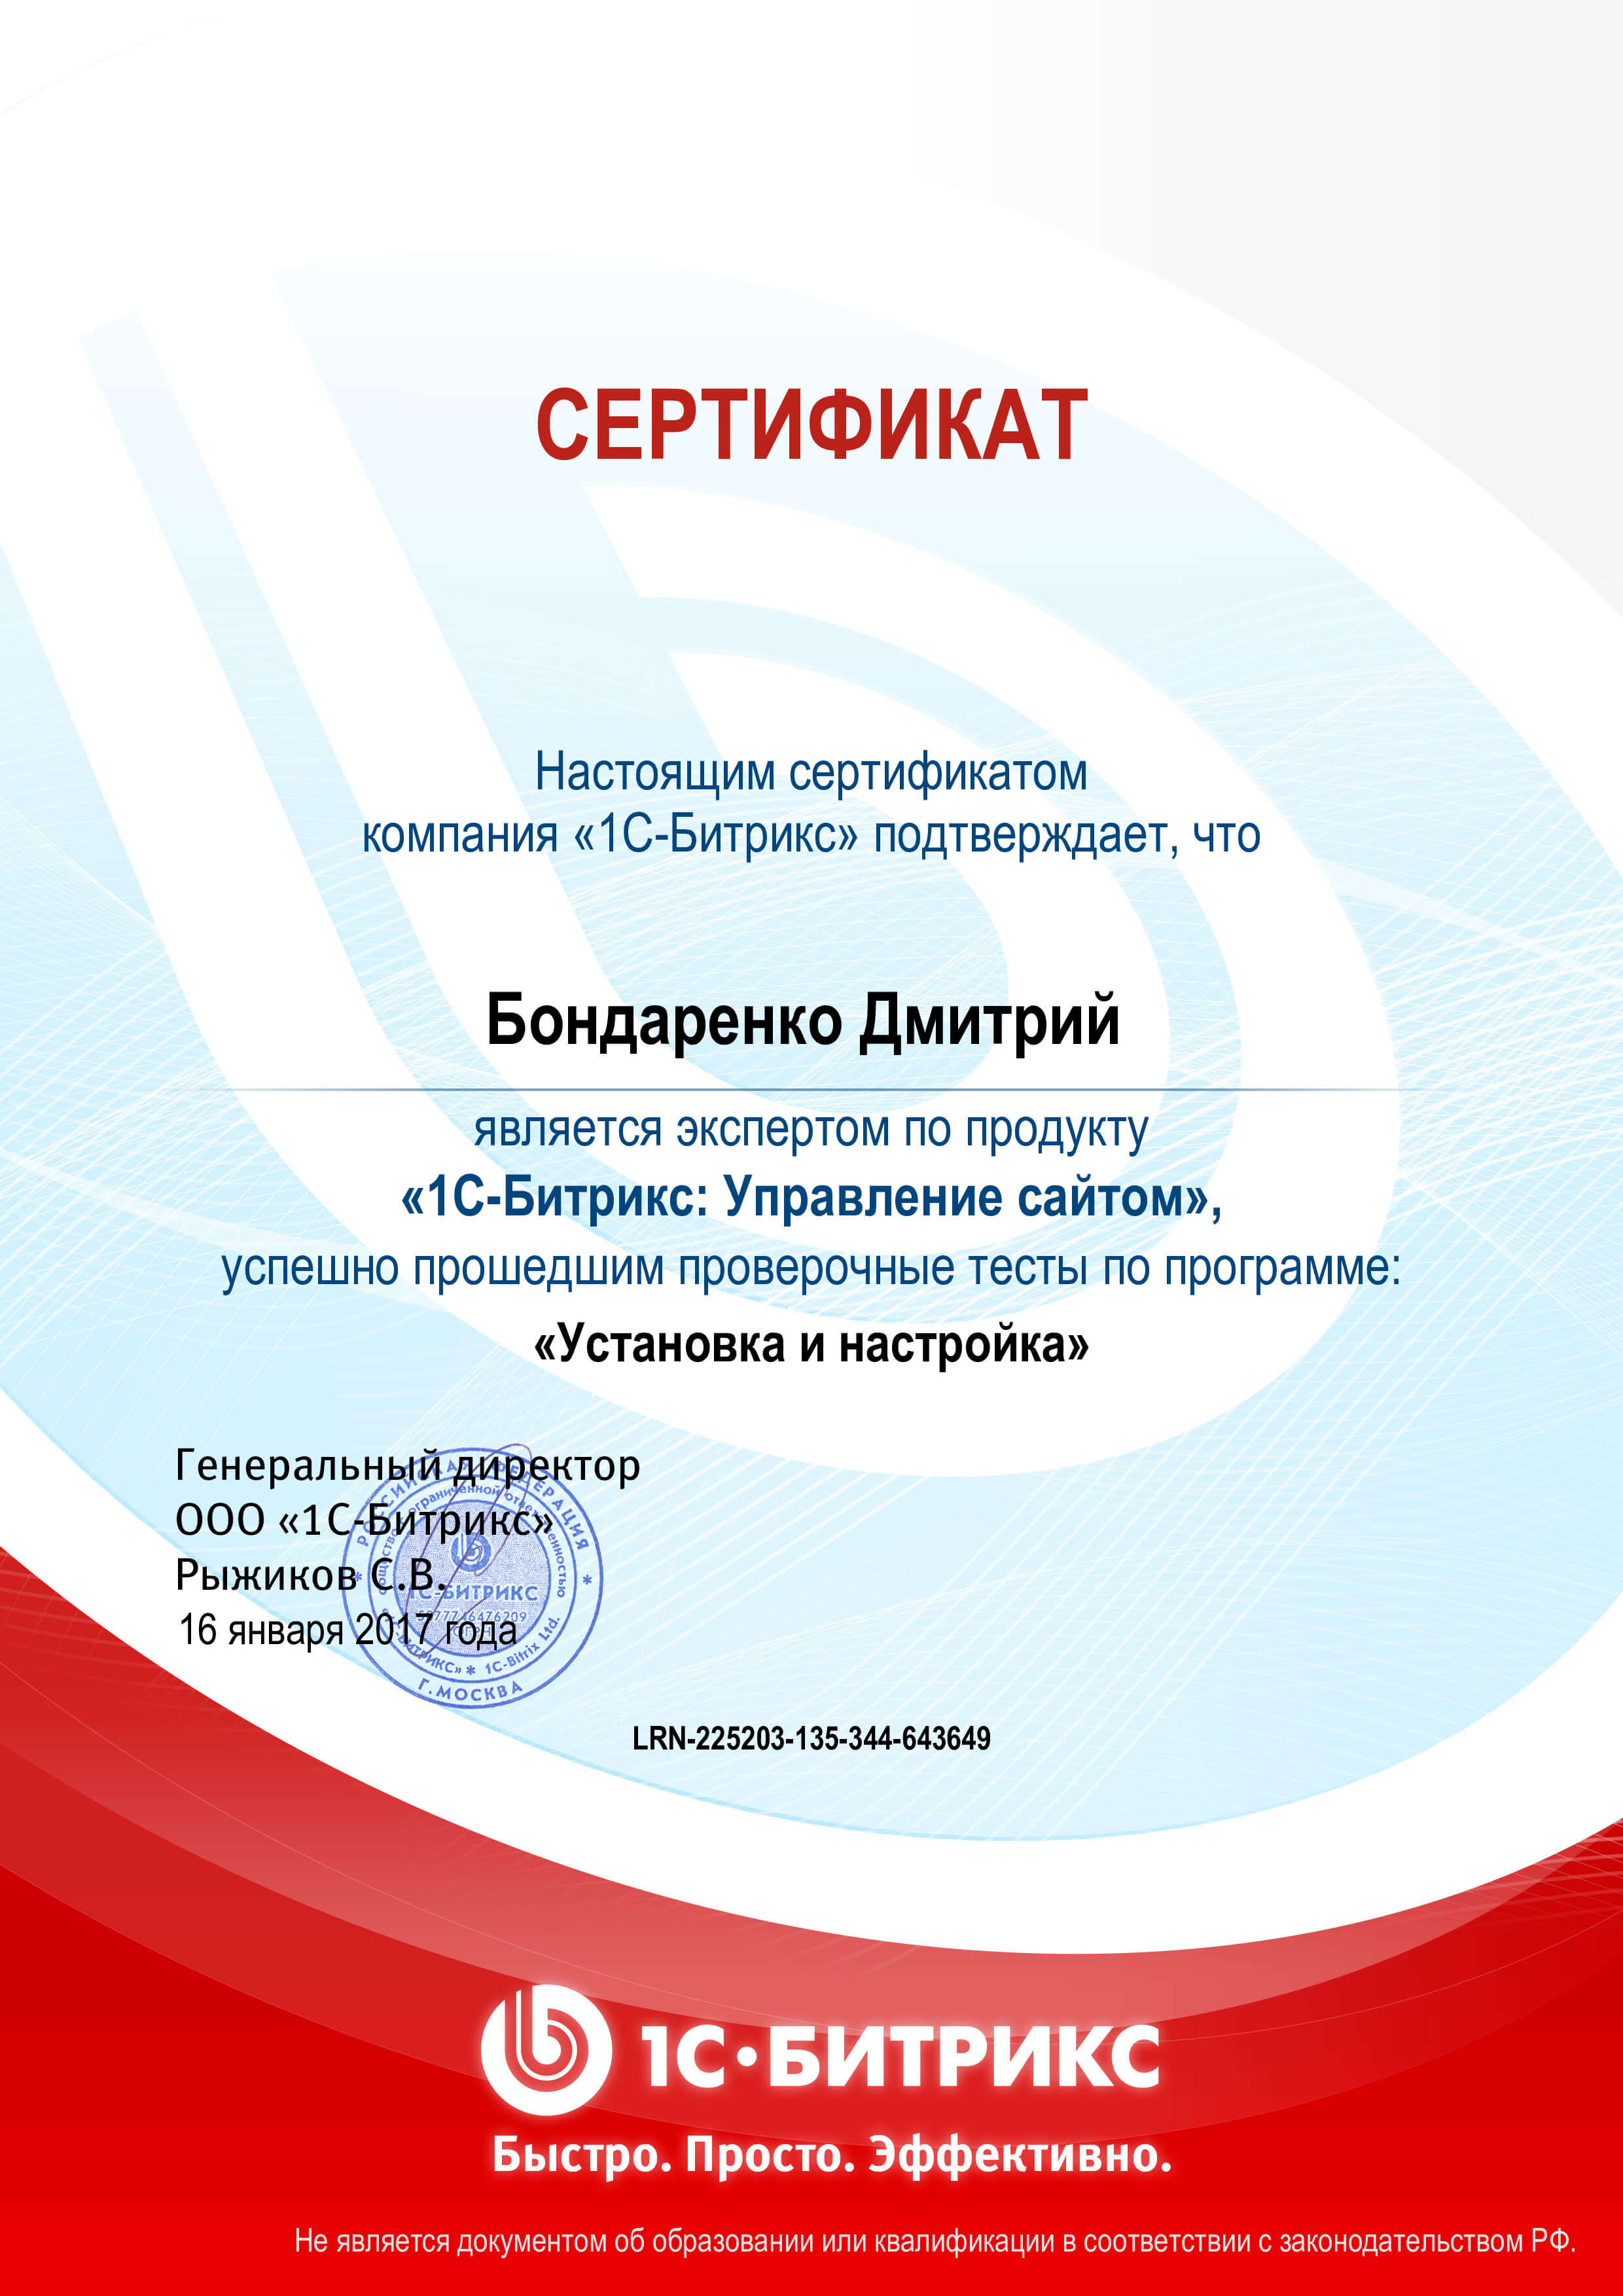 Сертификат “Установка и настройка”